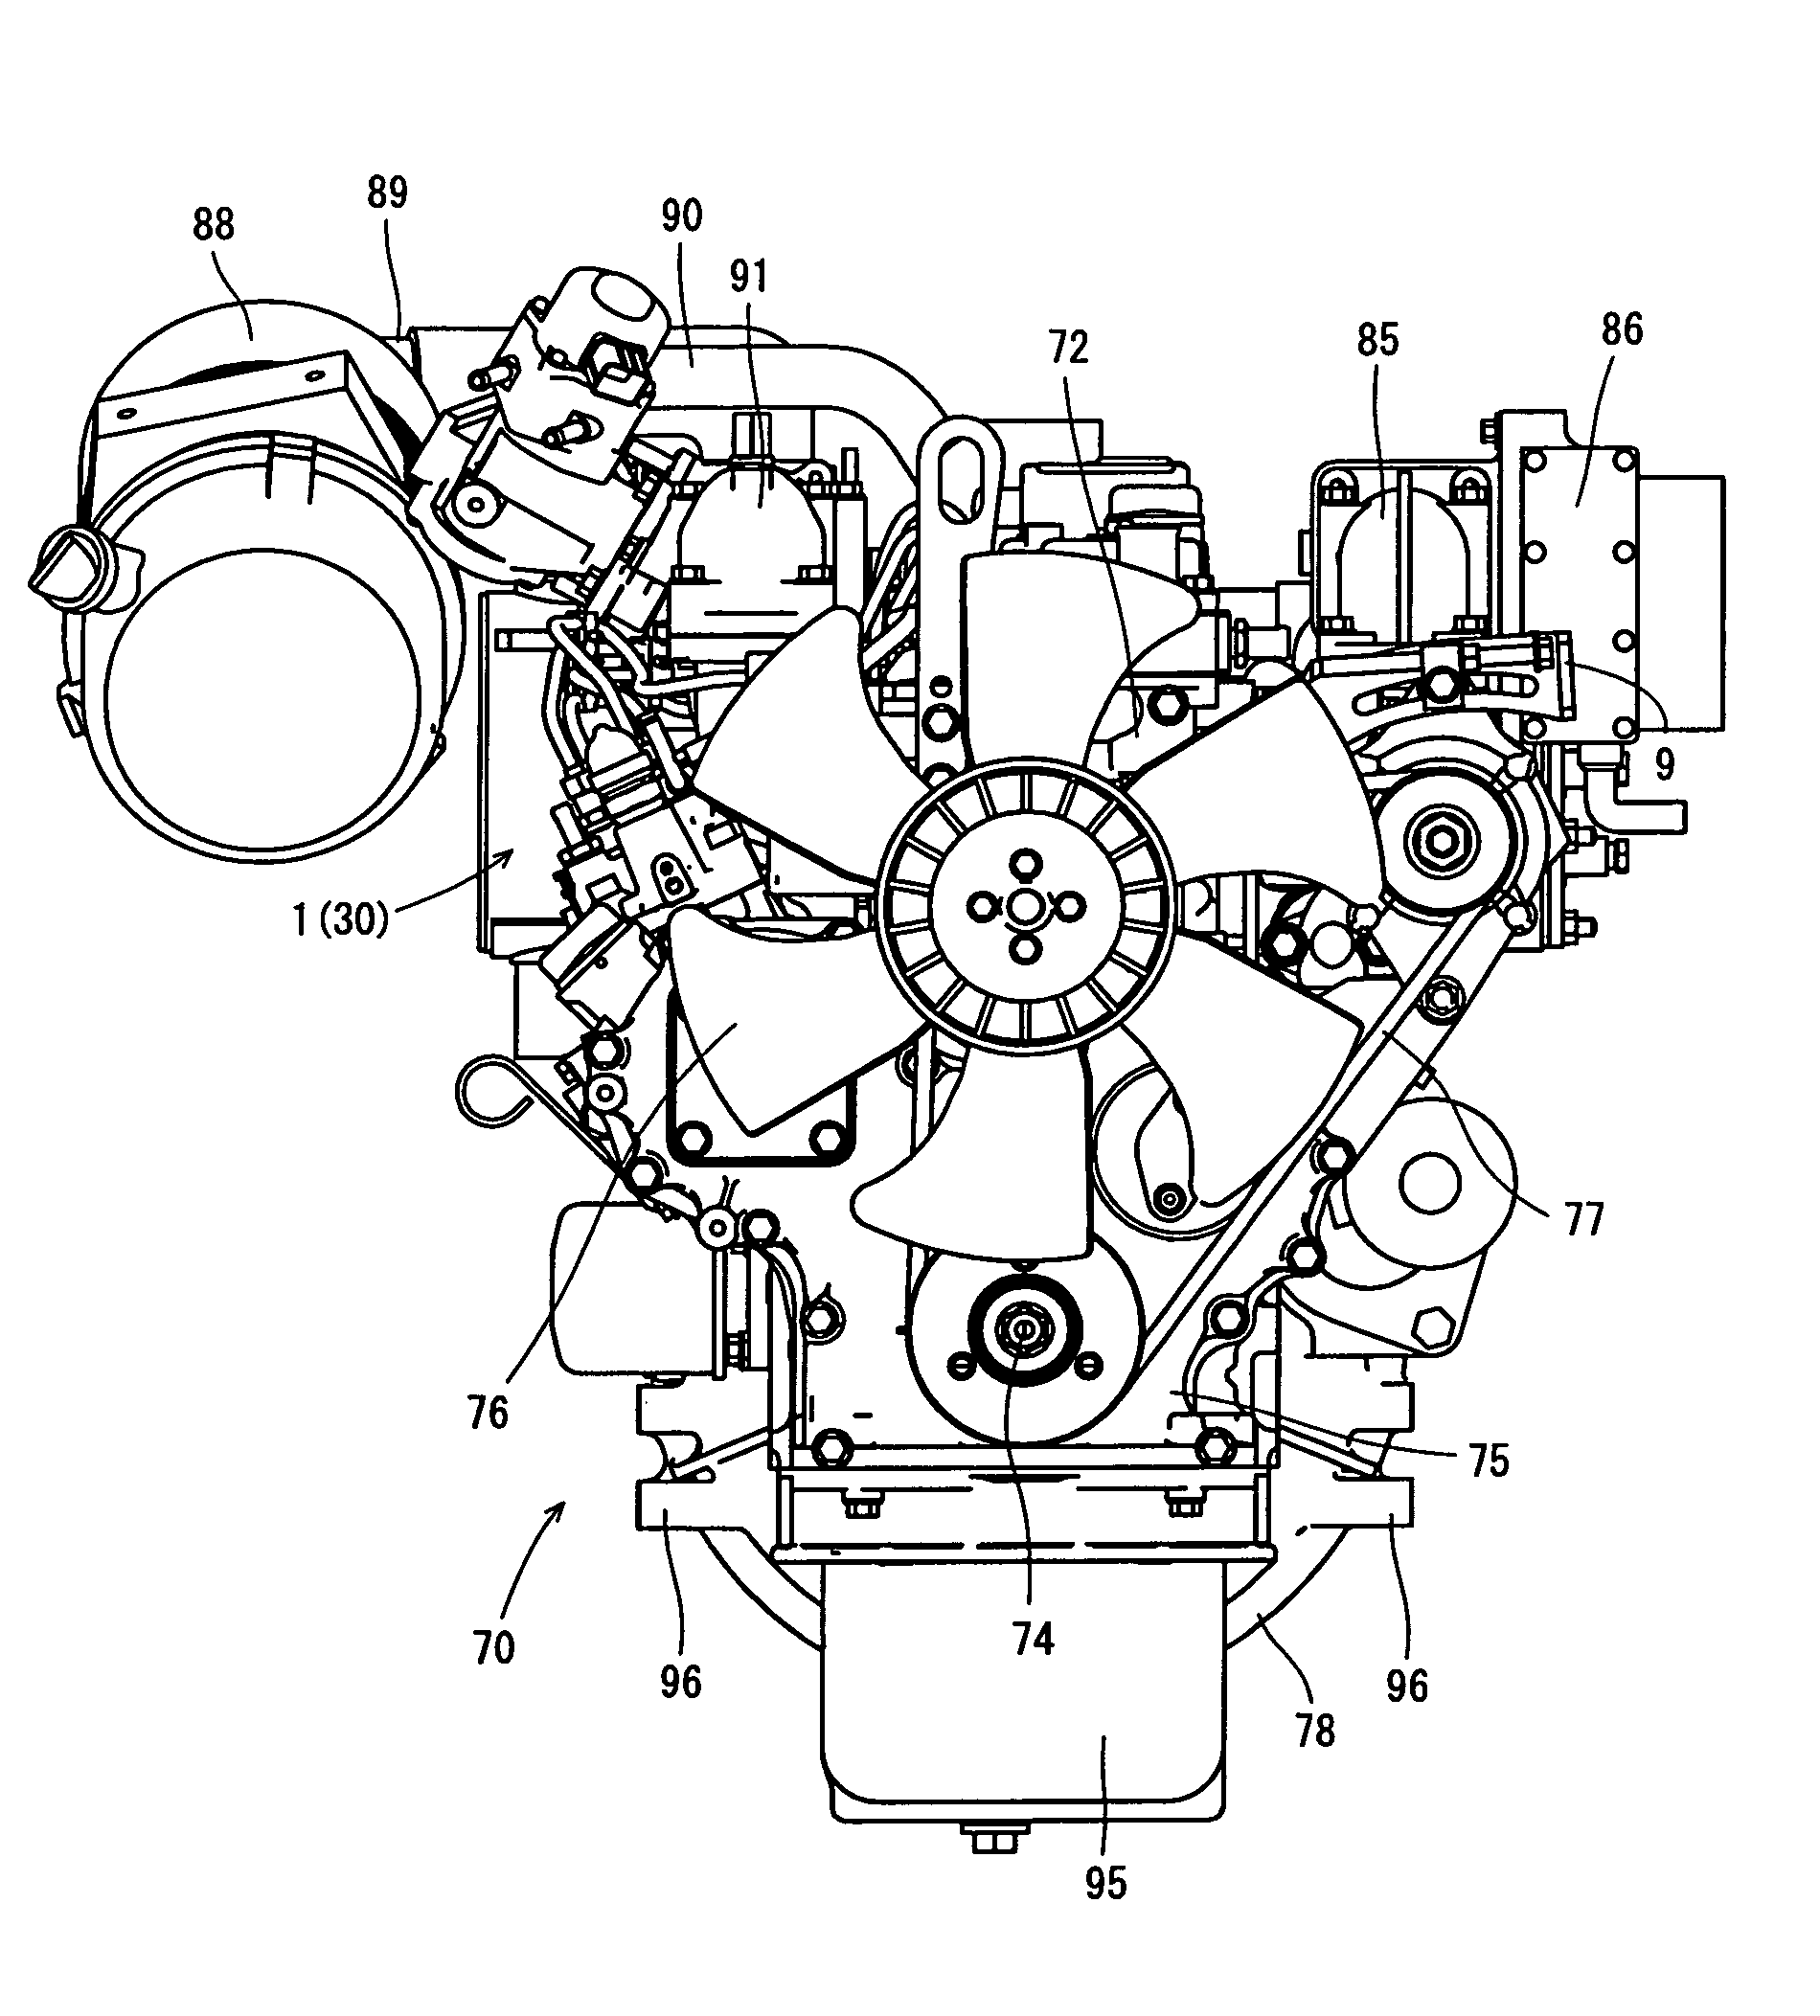 Work vehicle-mounted engine device